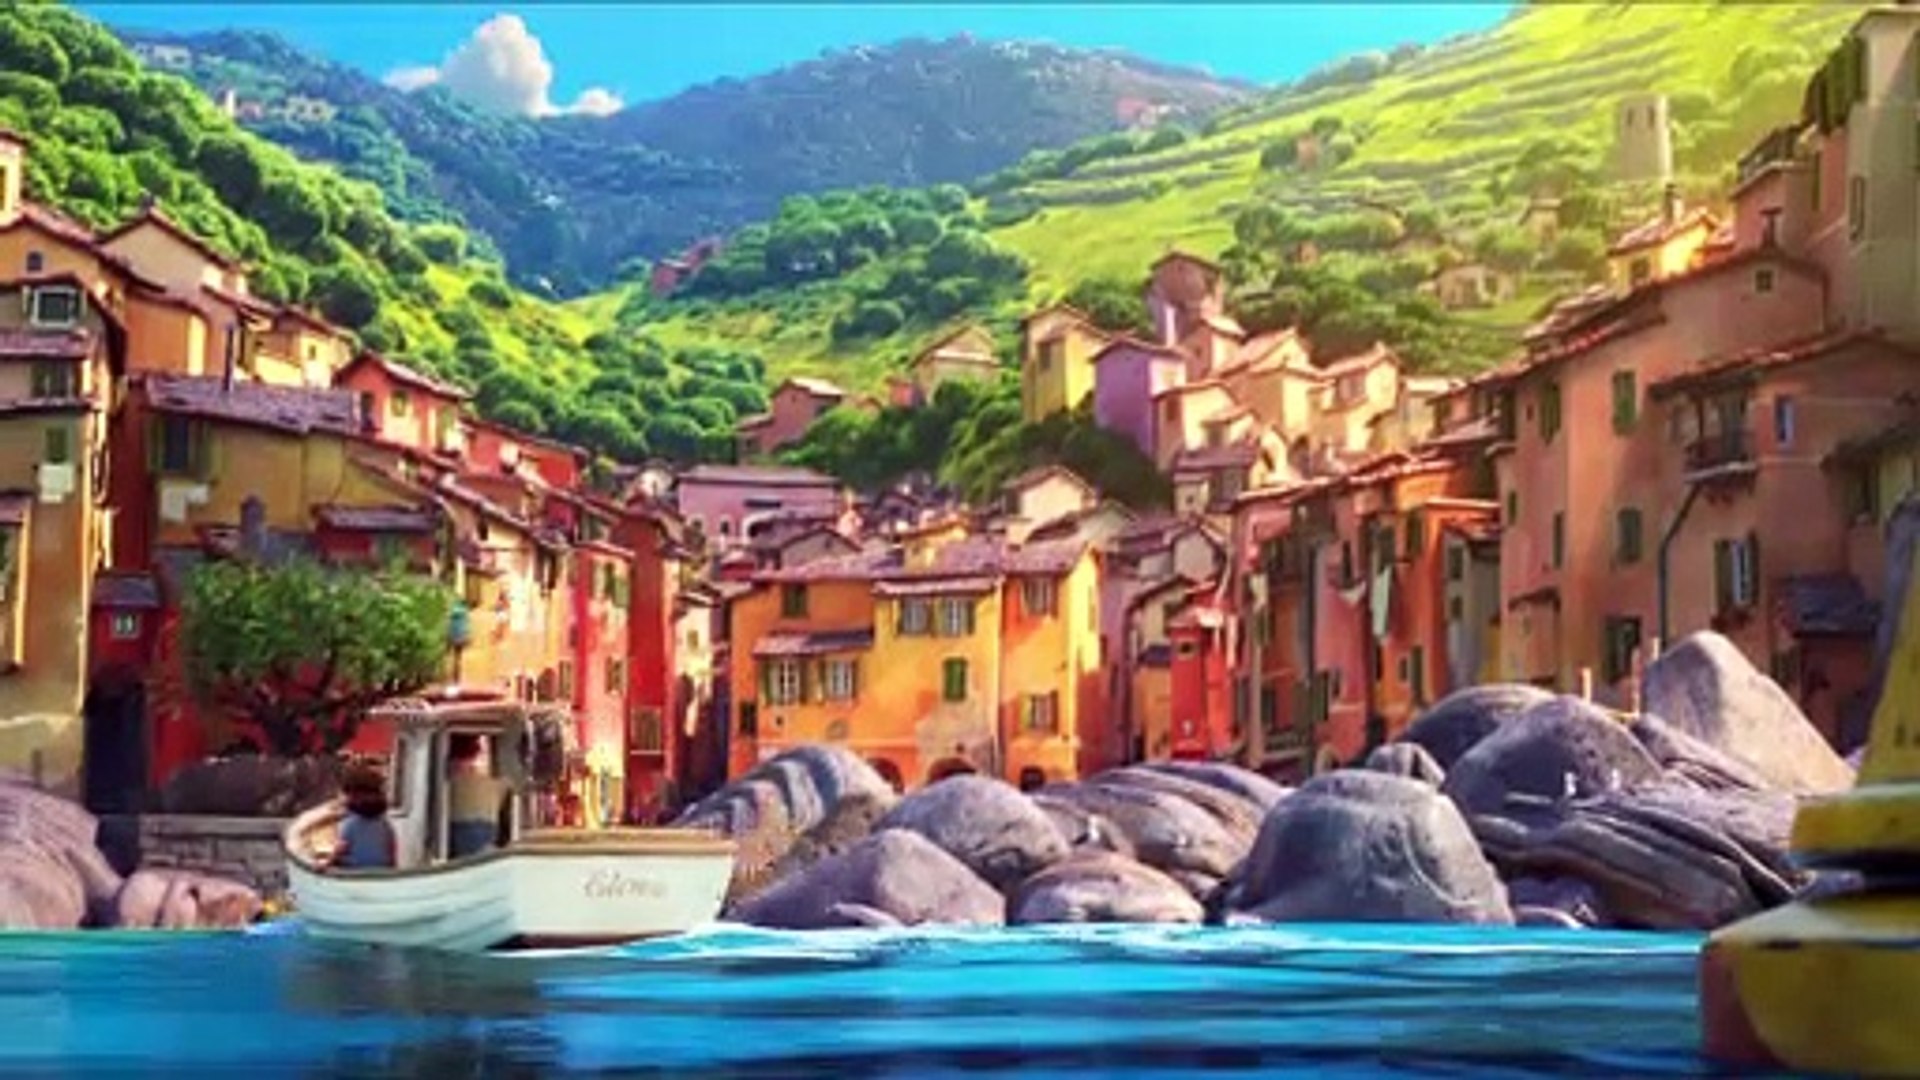 Luca trailer (2021) from Disney Pixar